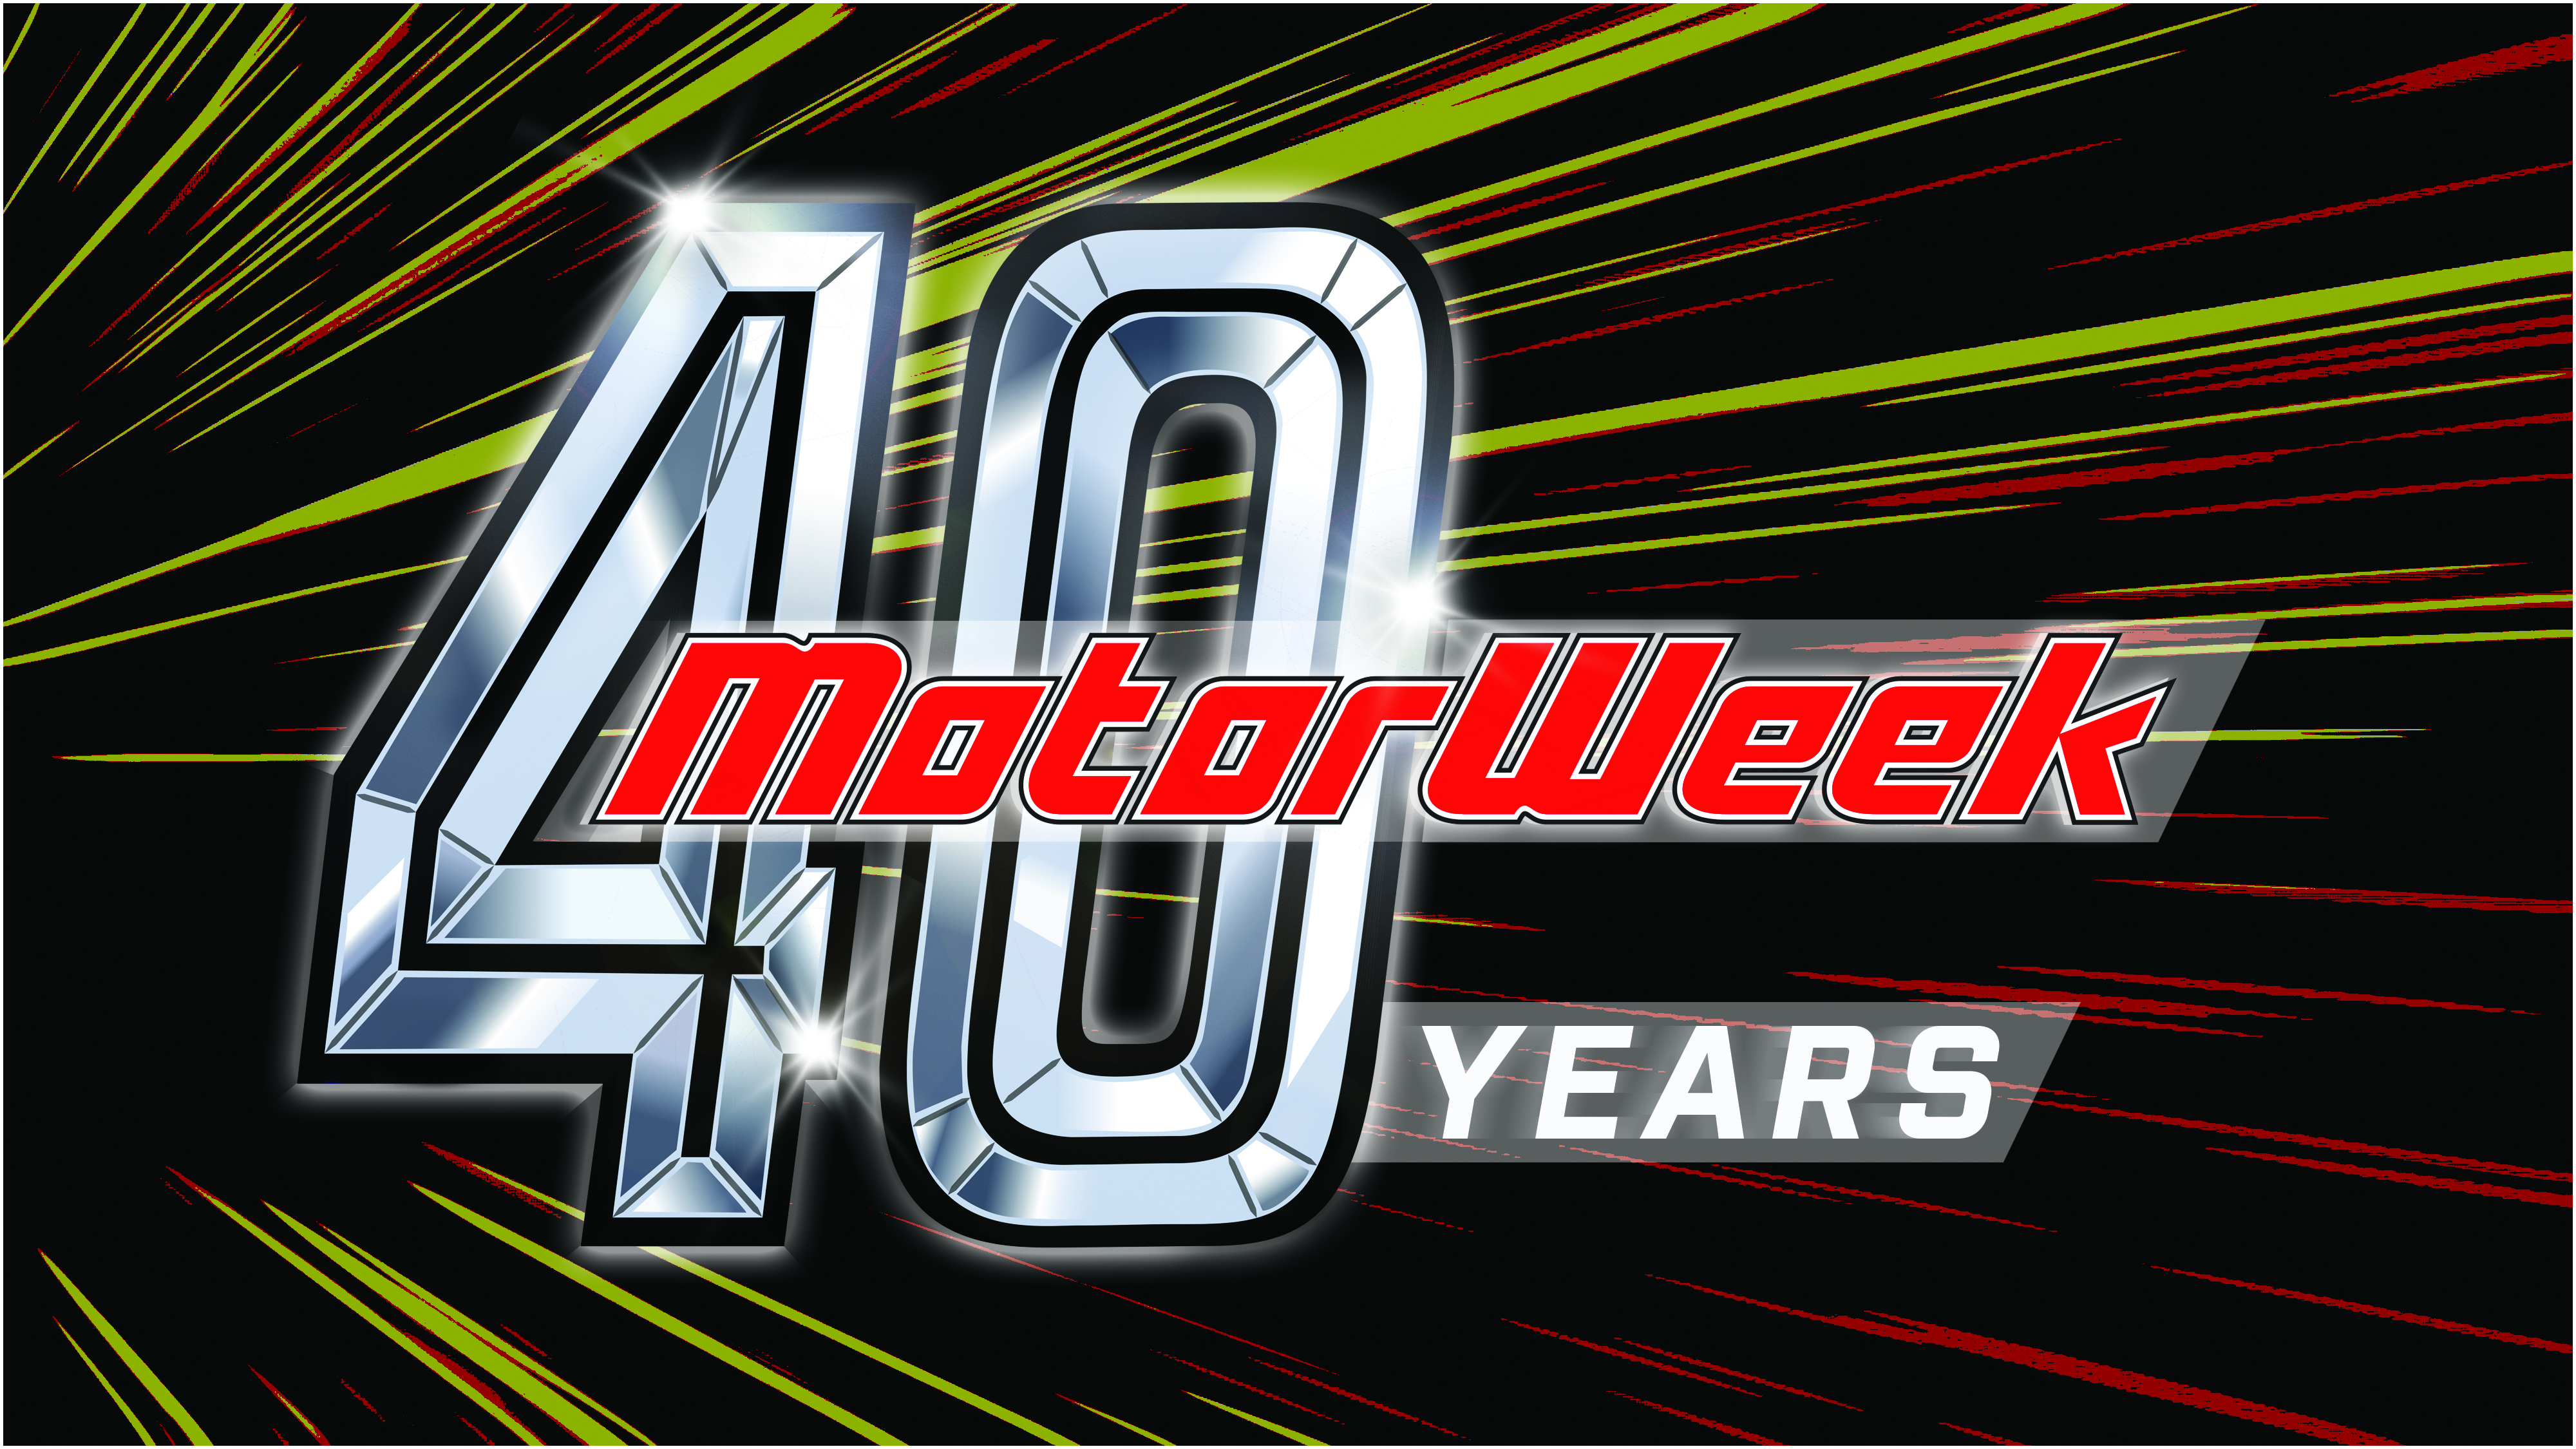 MotorWeek, television’s original and longest-running automotive magazine series, marks its milestone 40th season starting this fall.